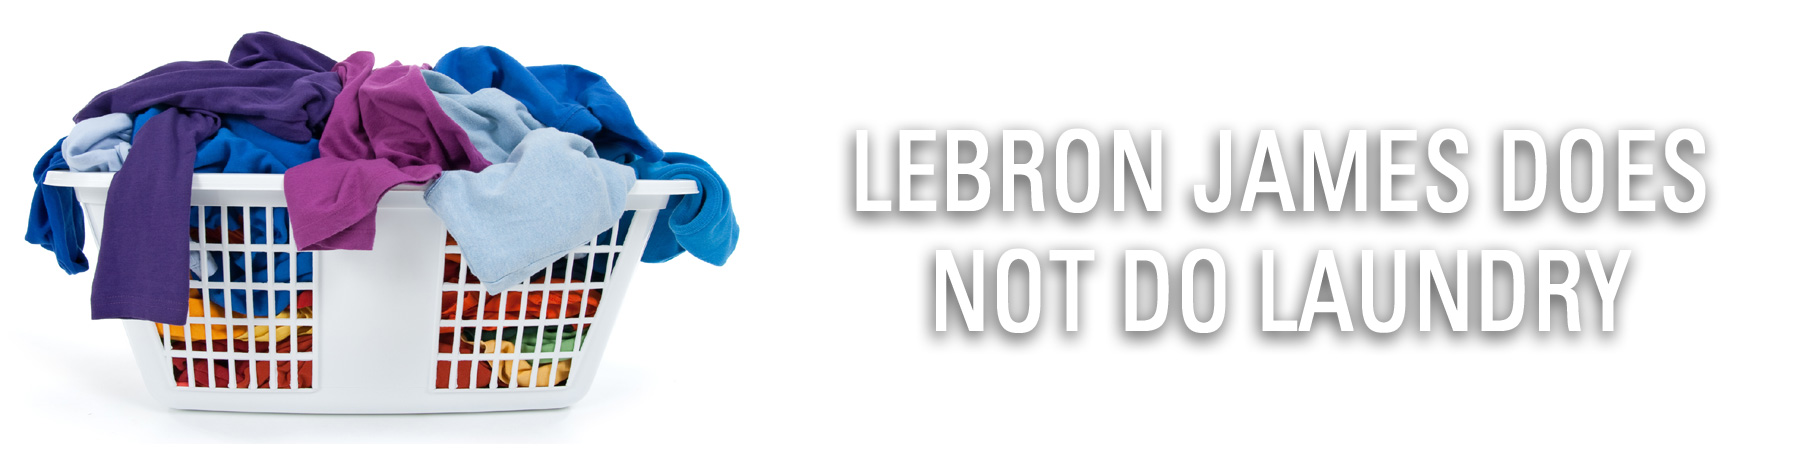 LeBron James Does Not Do Laundry